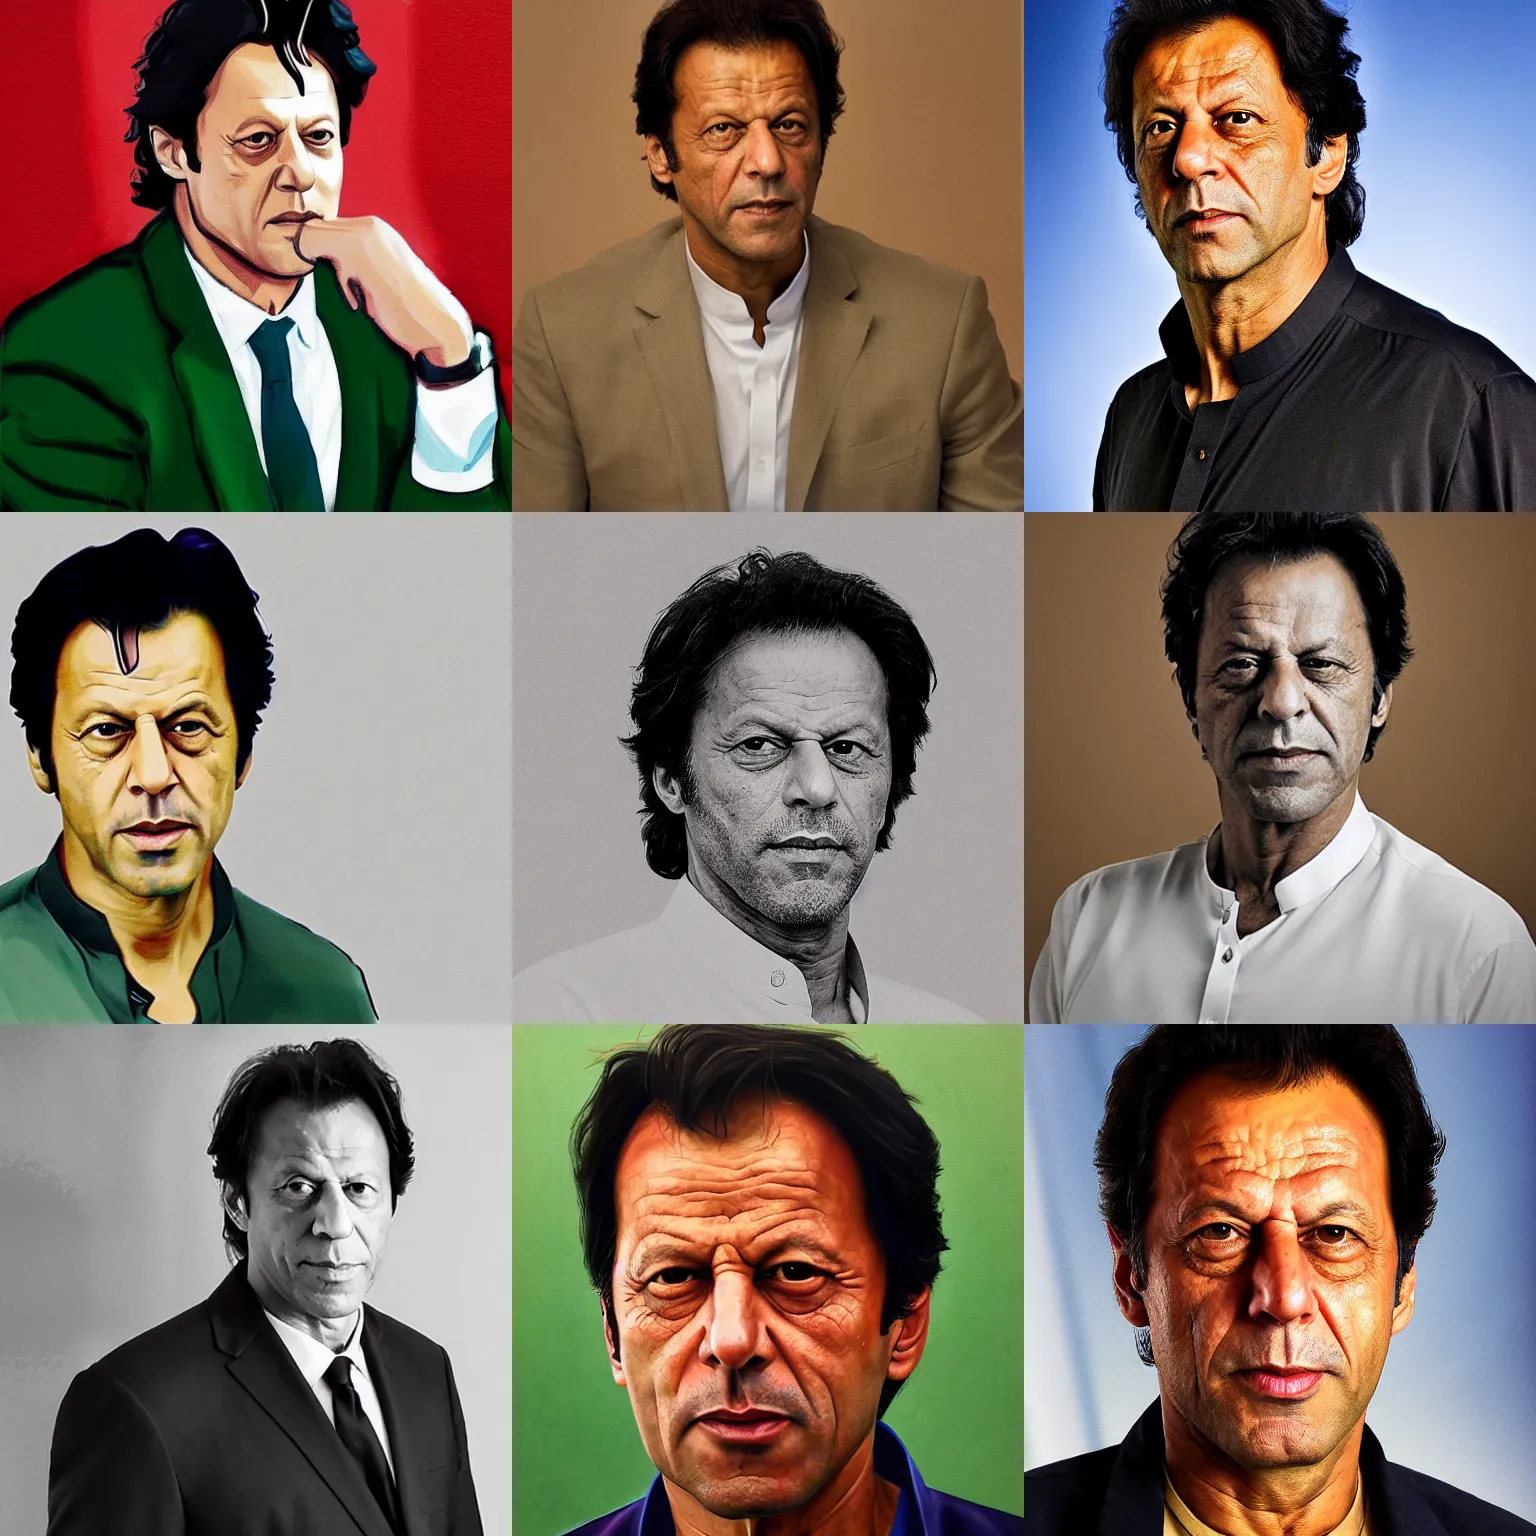 Prompt: A portrait of Imran Khan